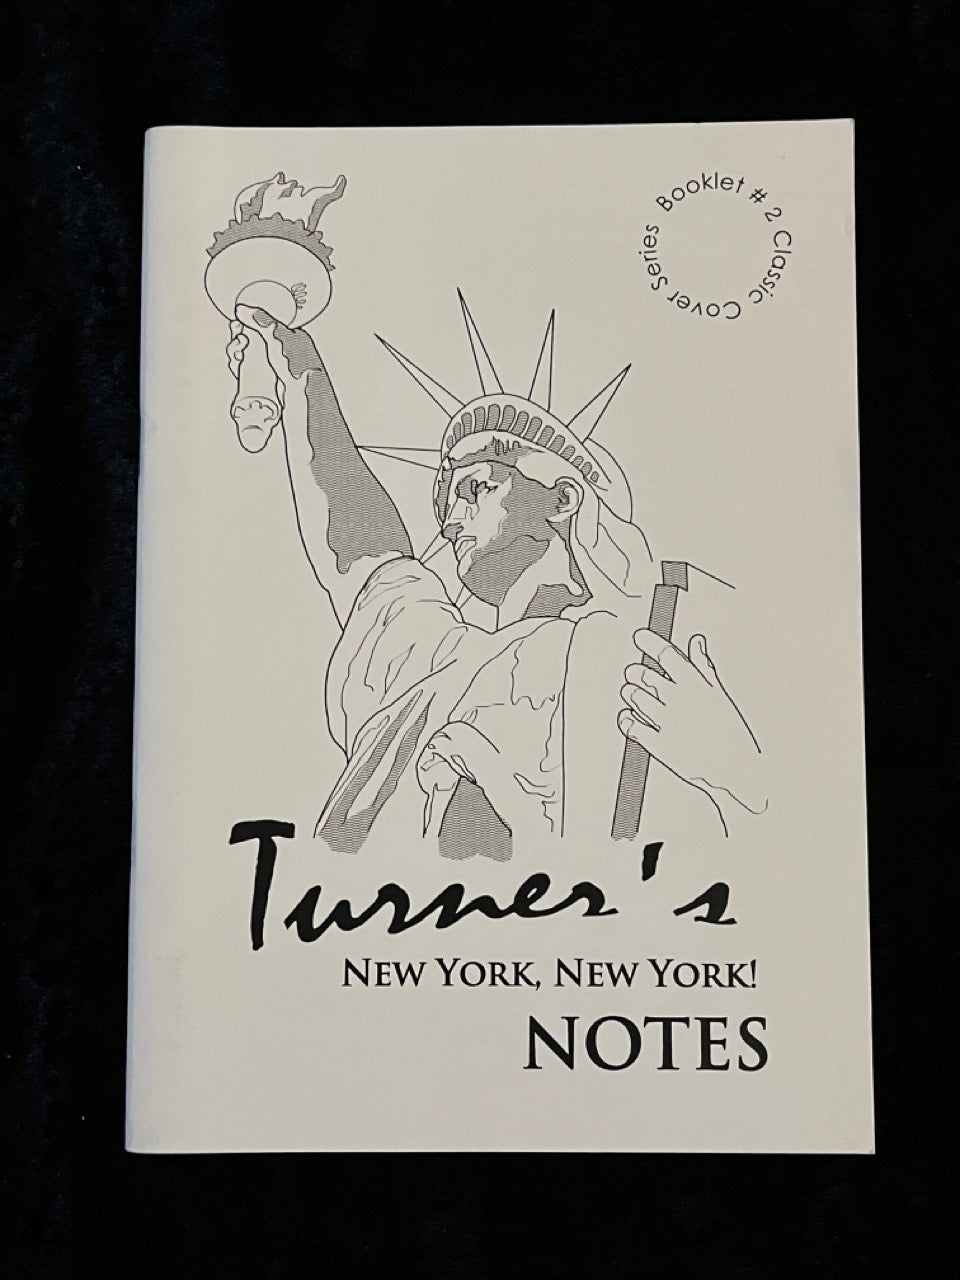 Turner's New York, New York! Notes - Peter Turner